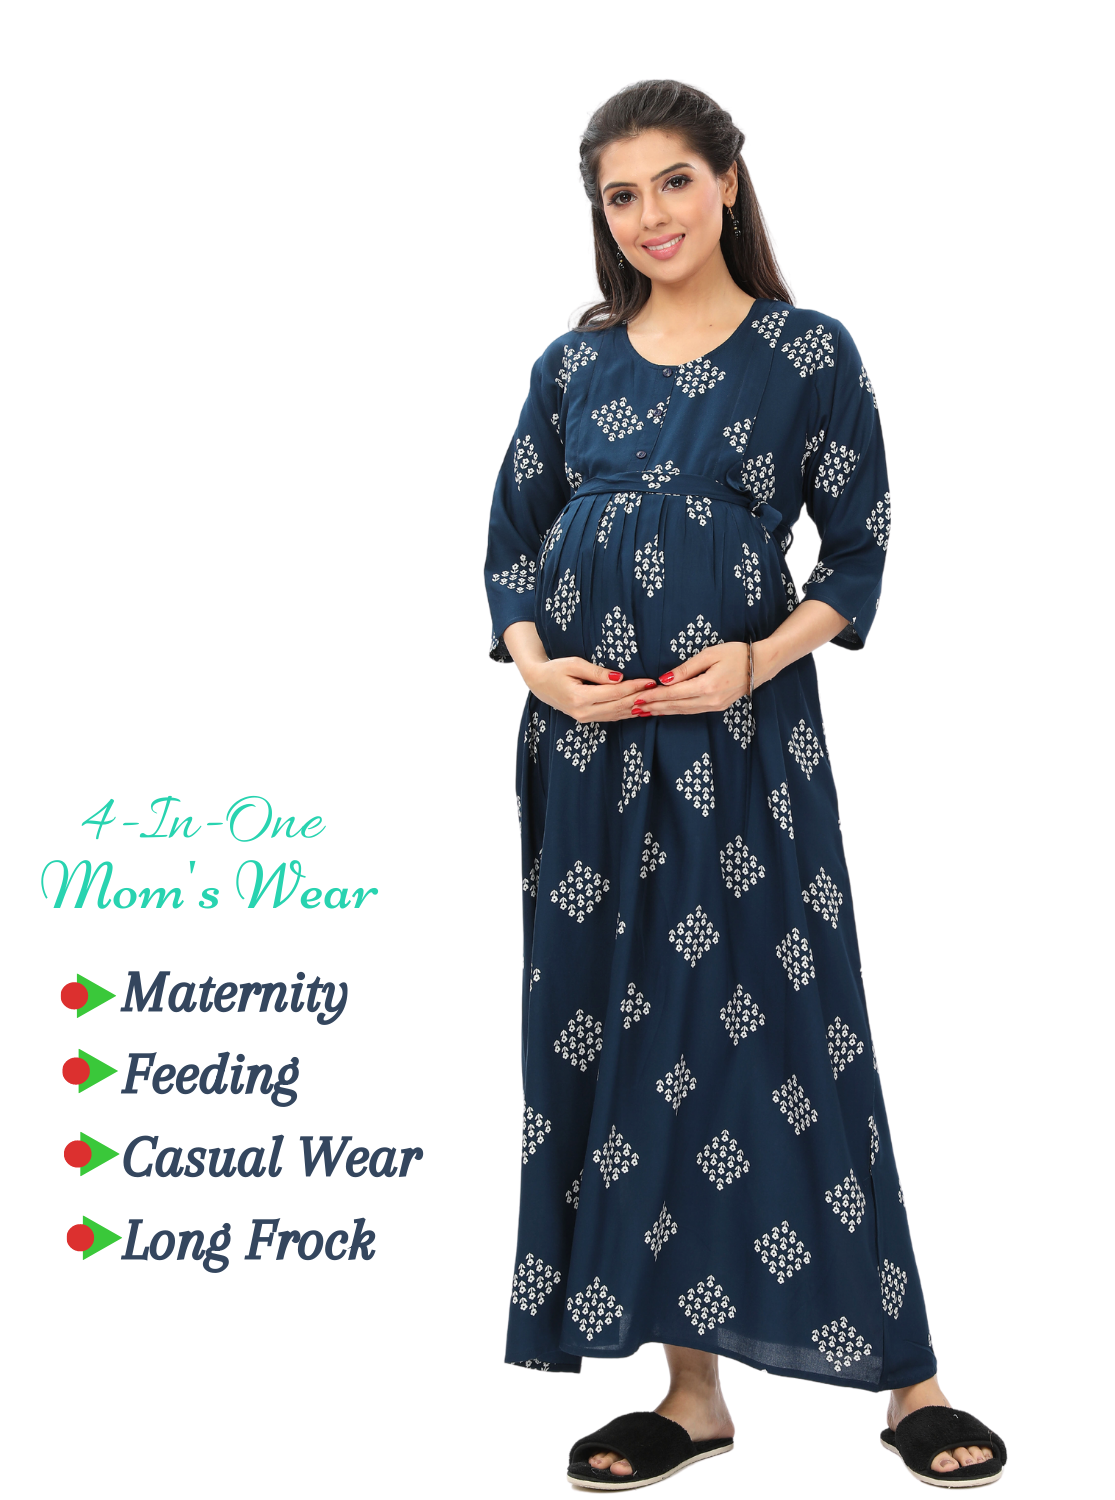 ONLY MINE 4-IN-ONE Mom's Wear - Premium Rayon Pregnancy Wear